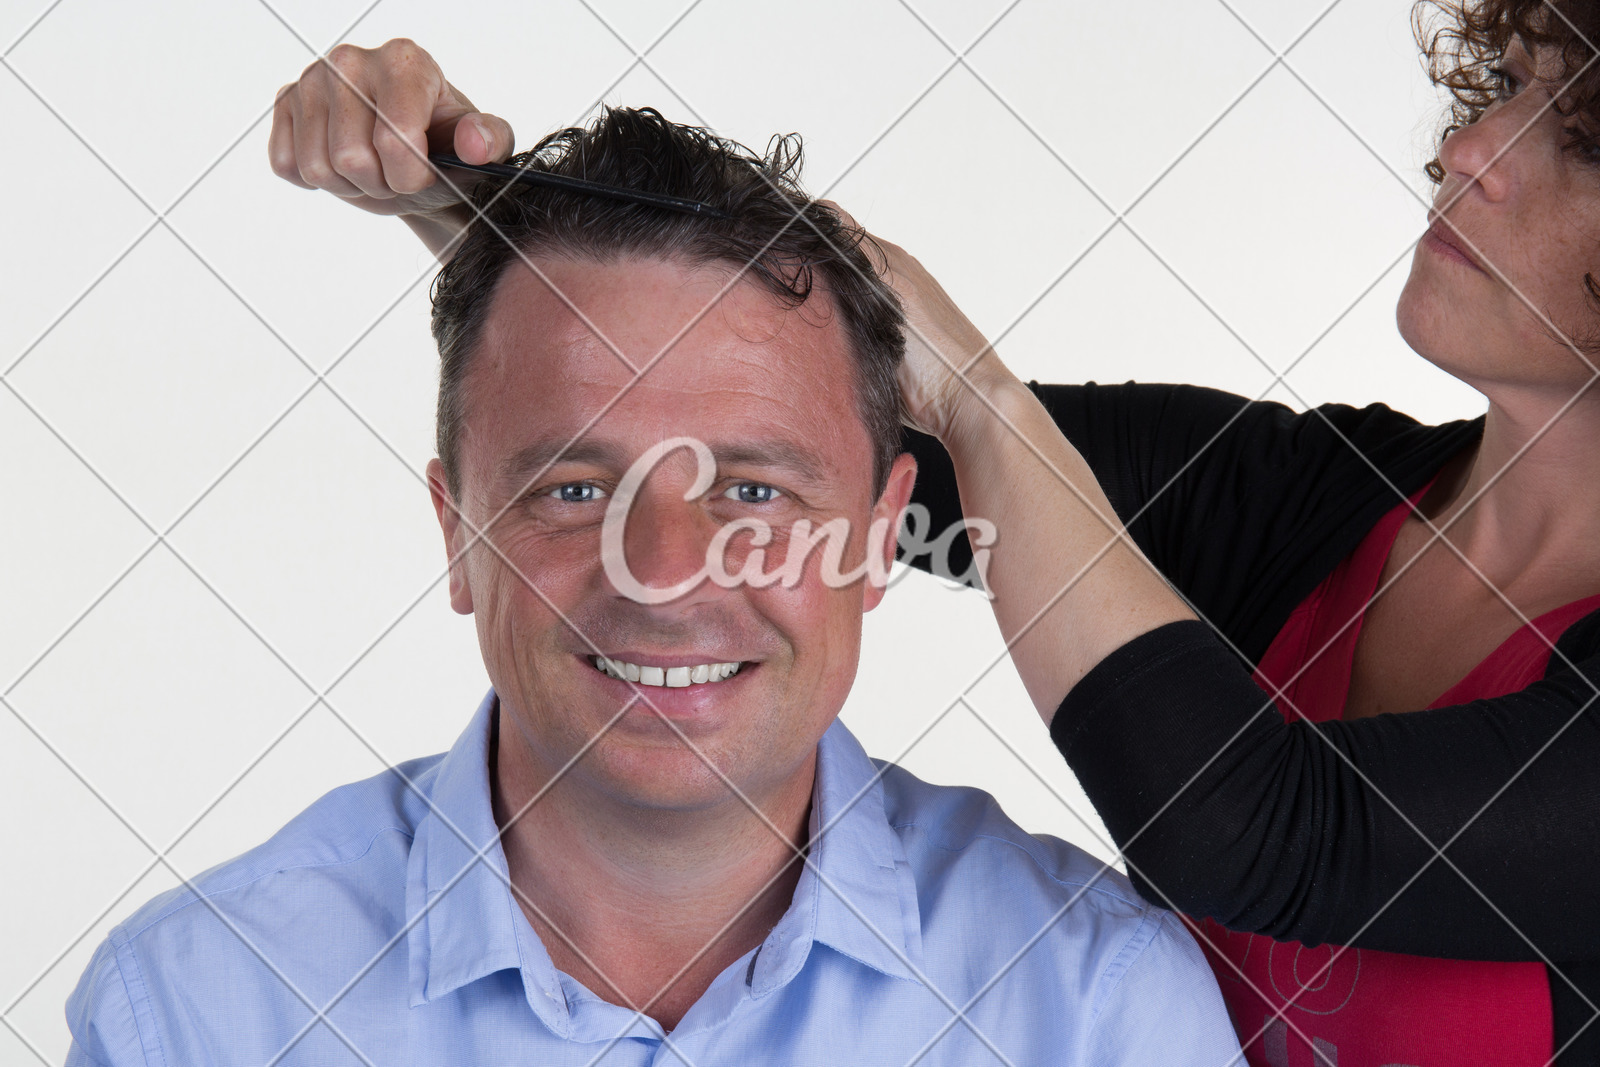 Cheerful Guy Cuts Hair At The Hair Salon By Woman Photos By Canva